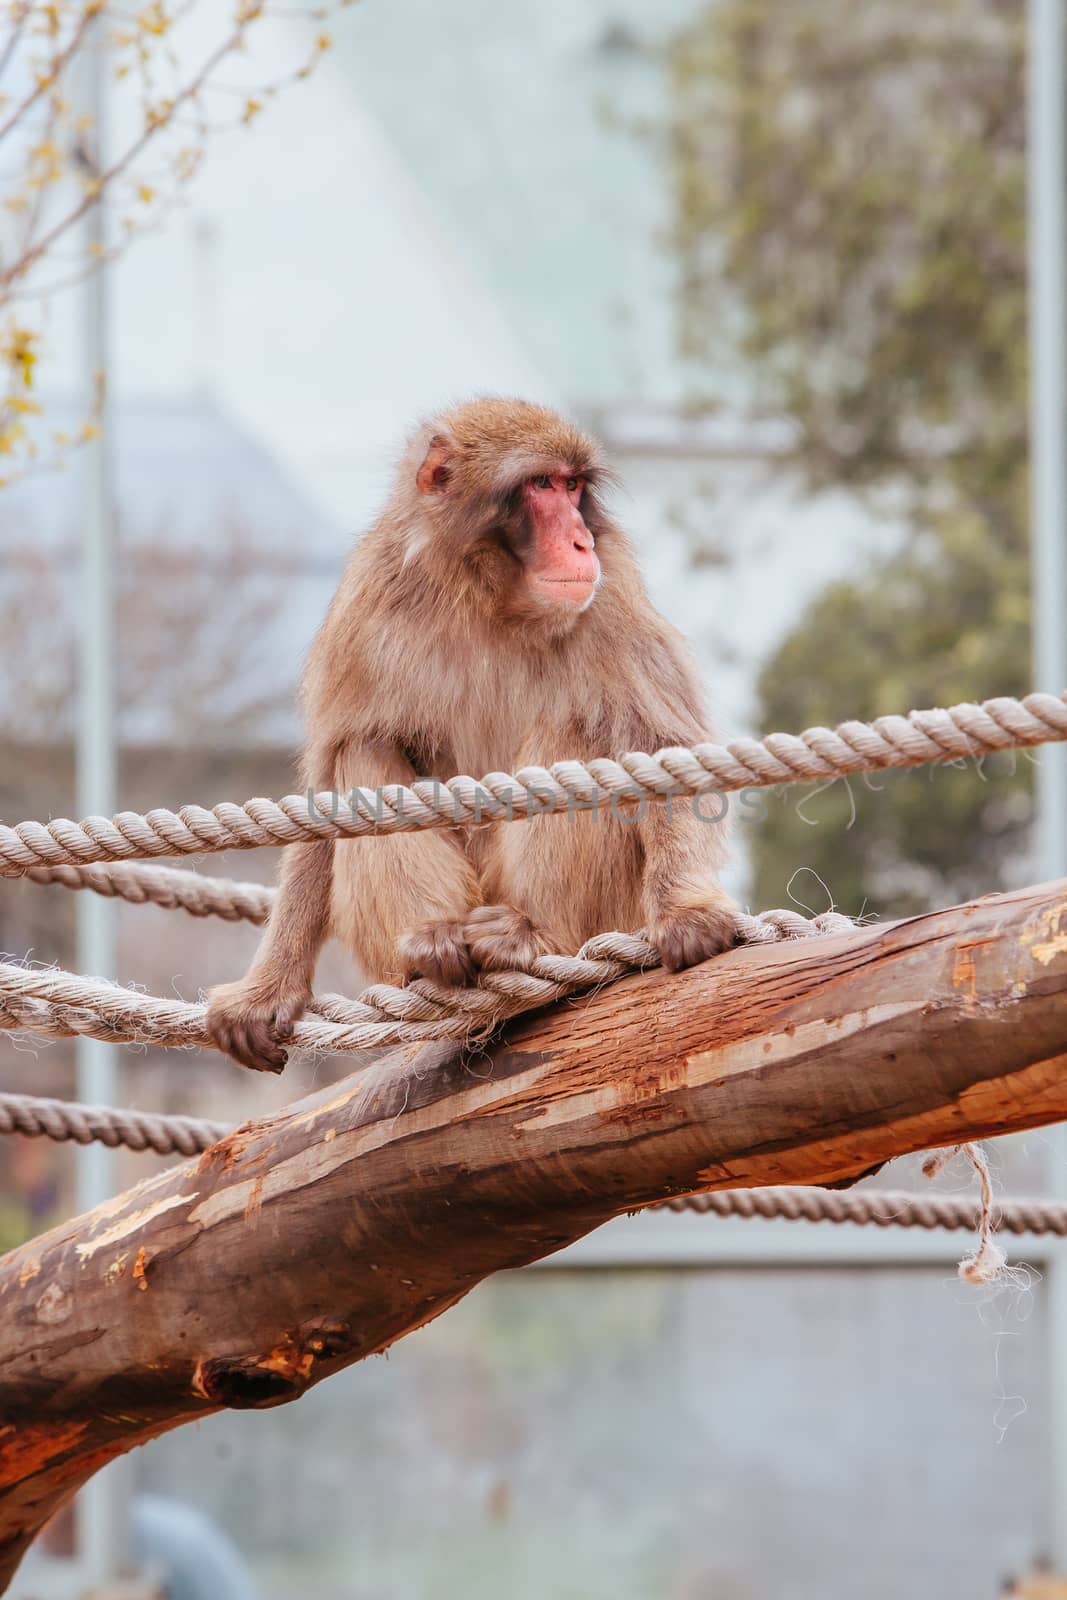 Launceston City Park Monkey Enclosure Tasmania Australia by FiledIMAGE